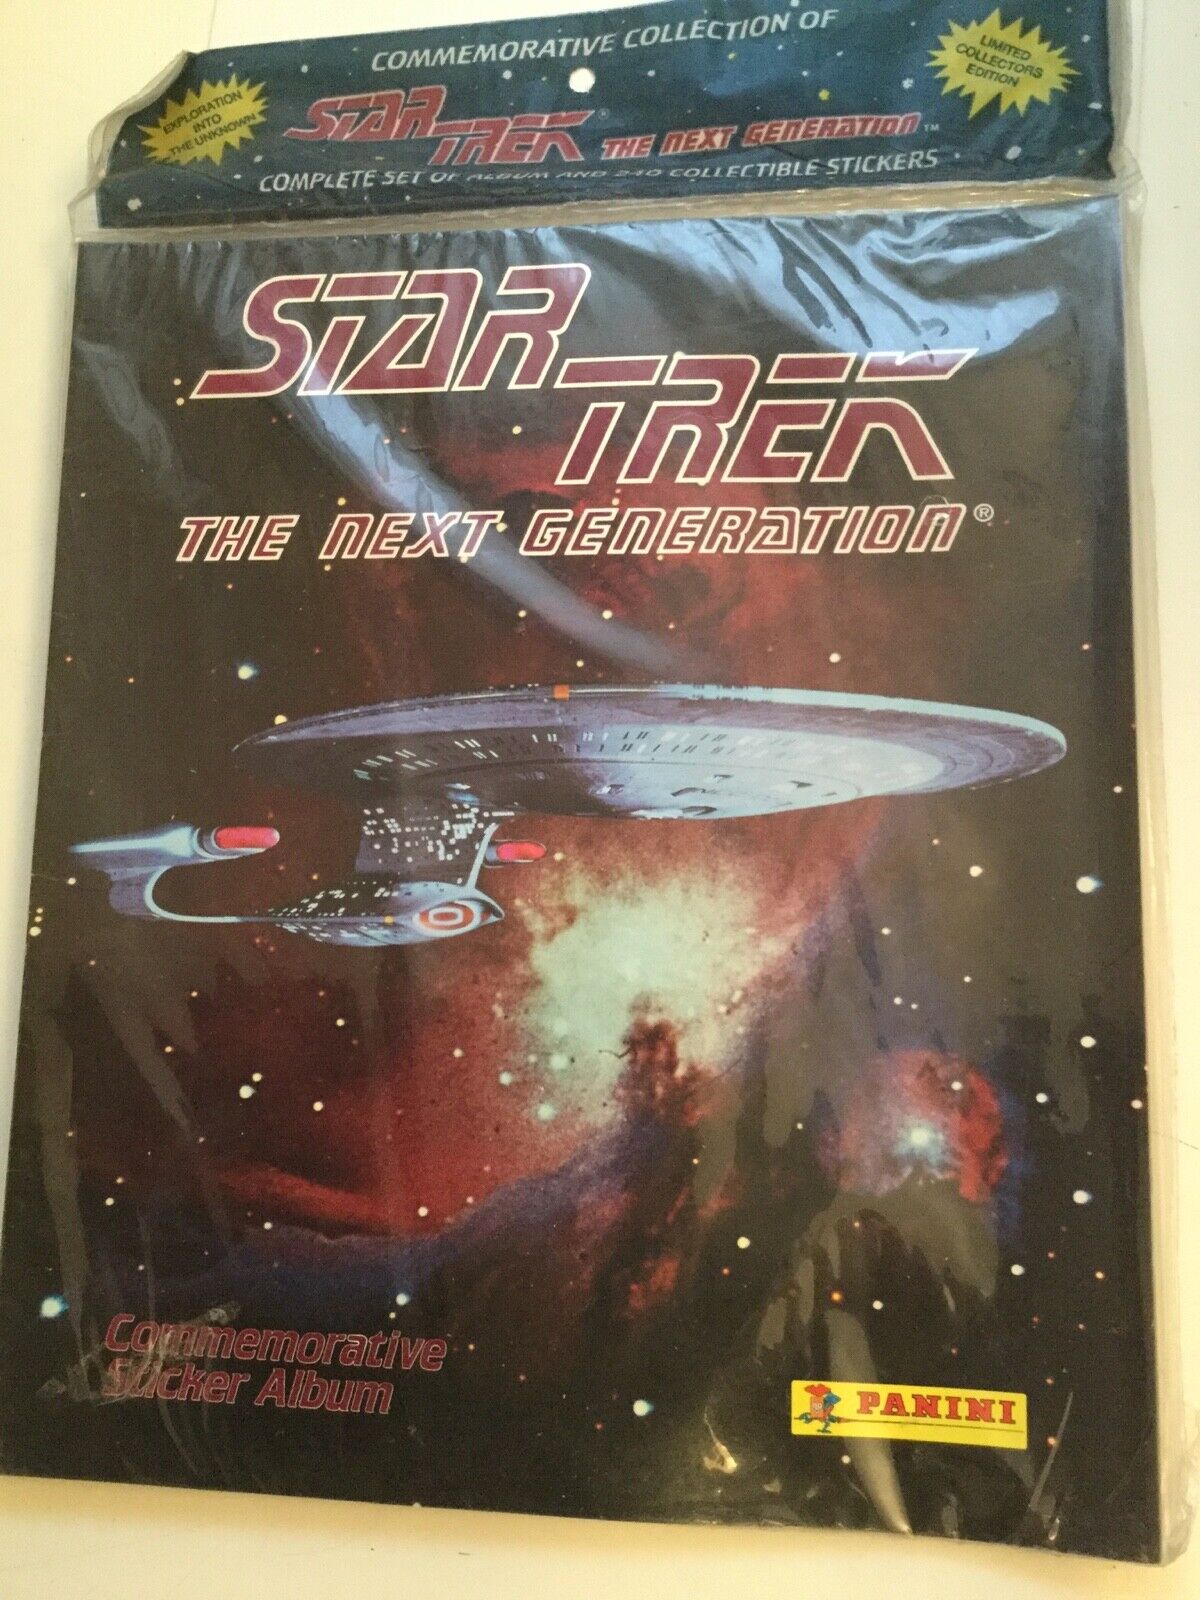 1987 Star Trek Next Generation TV show Panini album and stickers set 